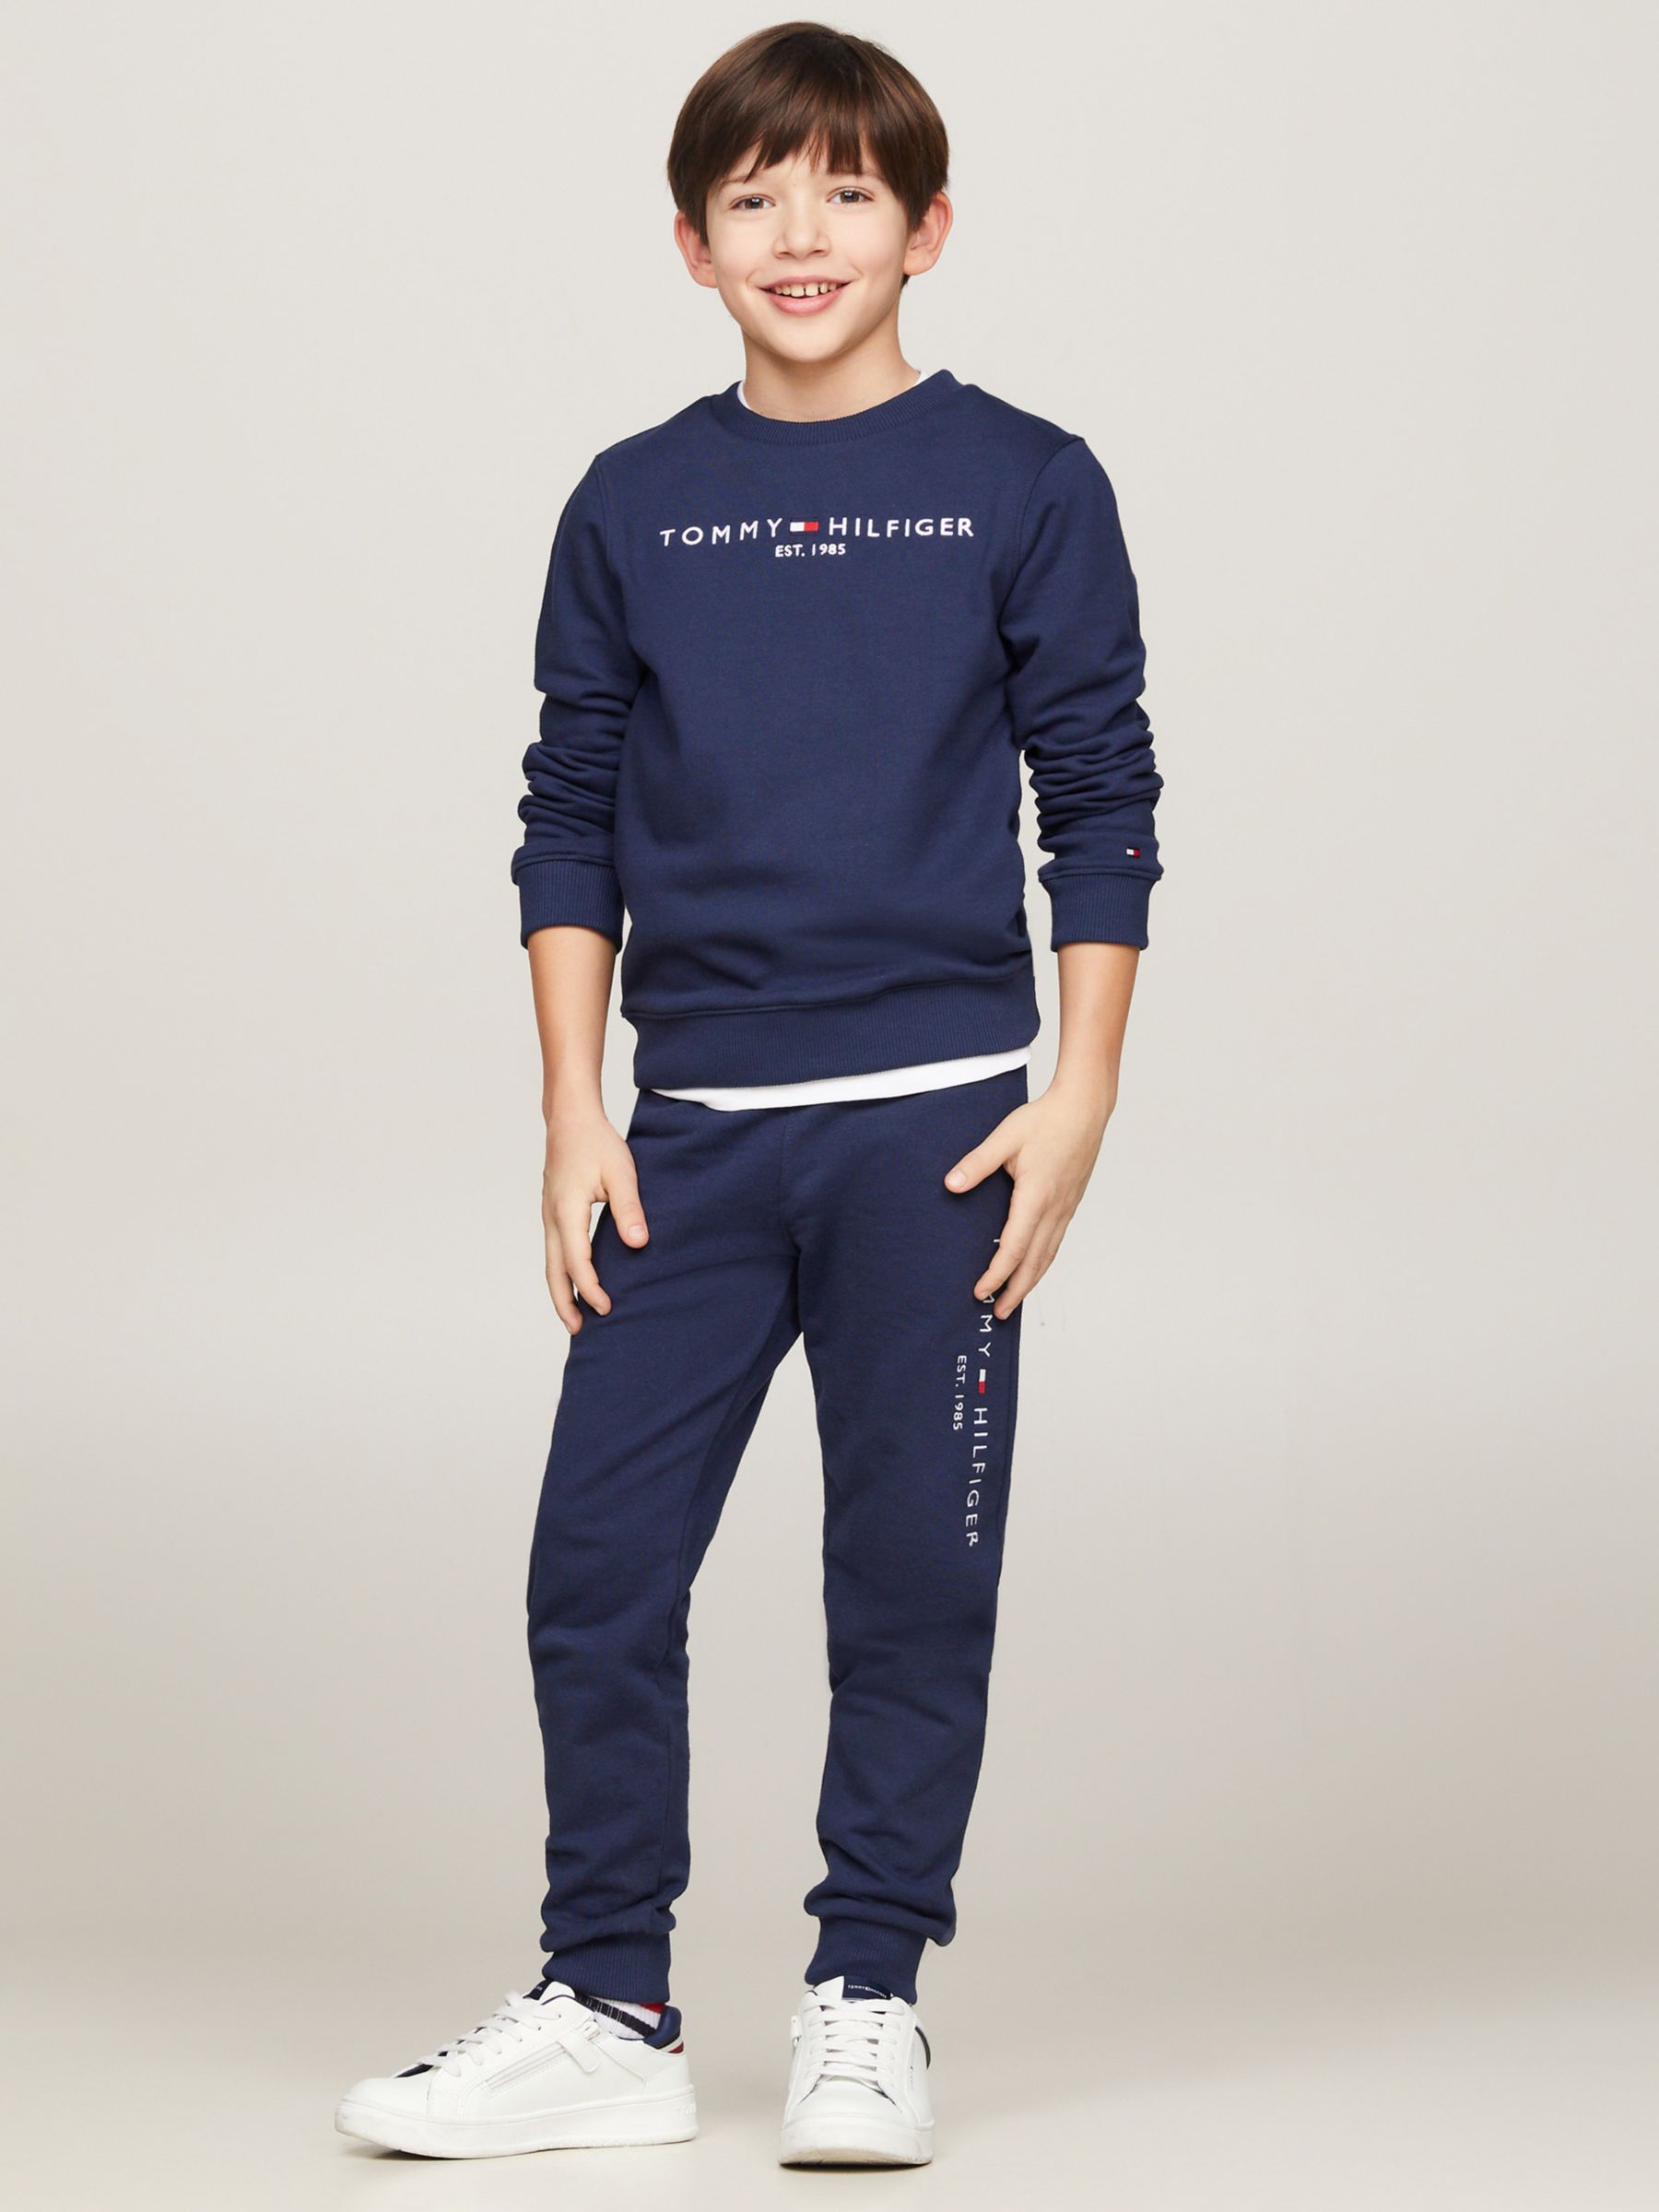 Tommy Hilfiger Kids\' Lewis Twilight John Organic Sweatshirt, Partners Cotton Essential Navy Logo at 